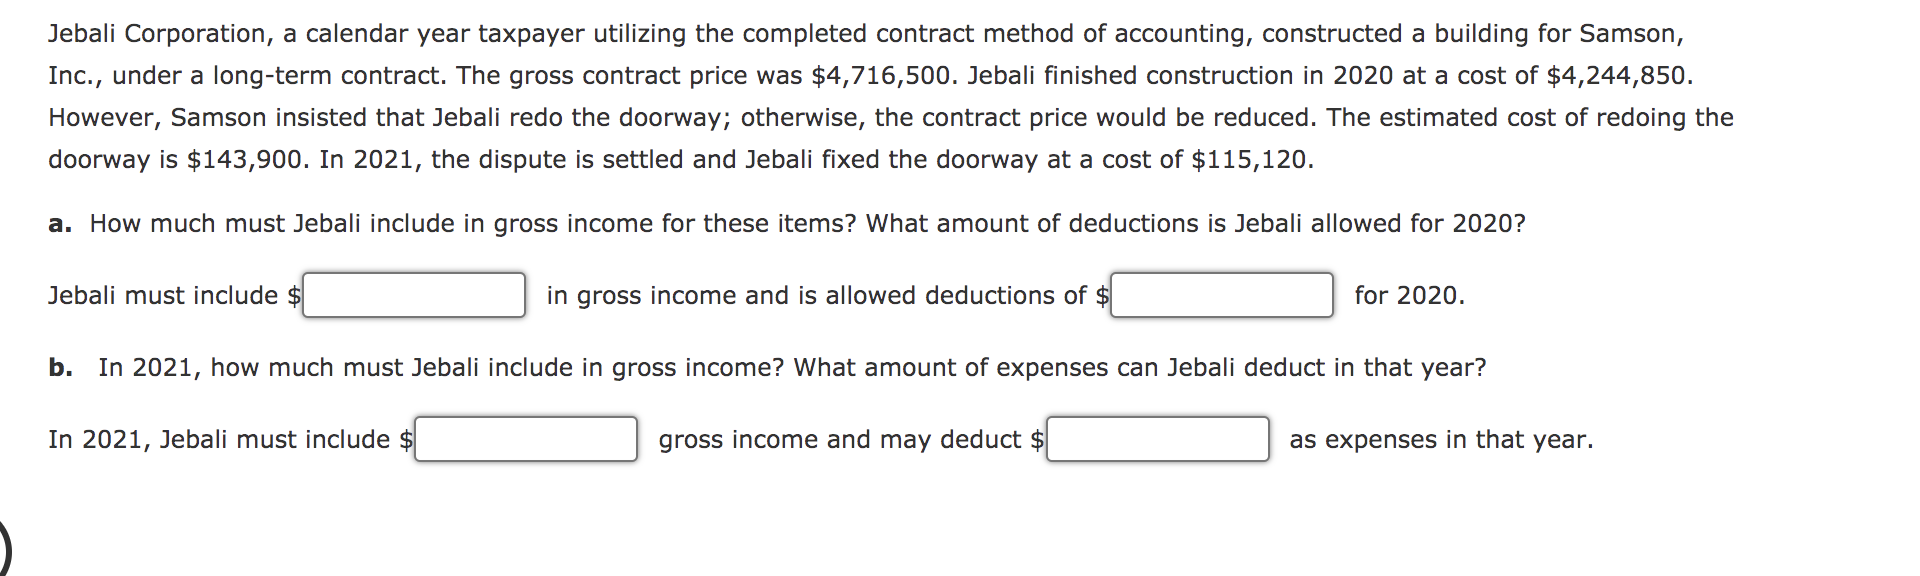 Solved Jebali Corporation, a calendar year taxpayer